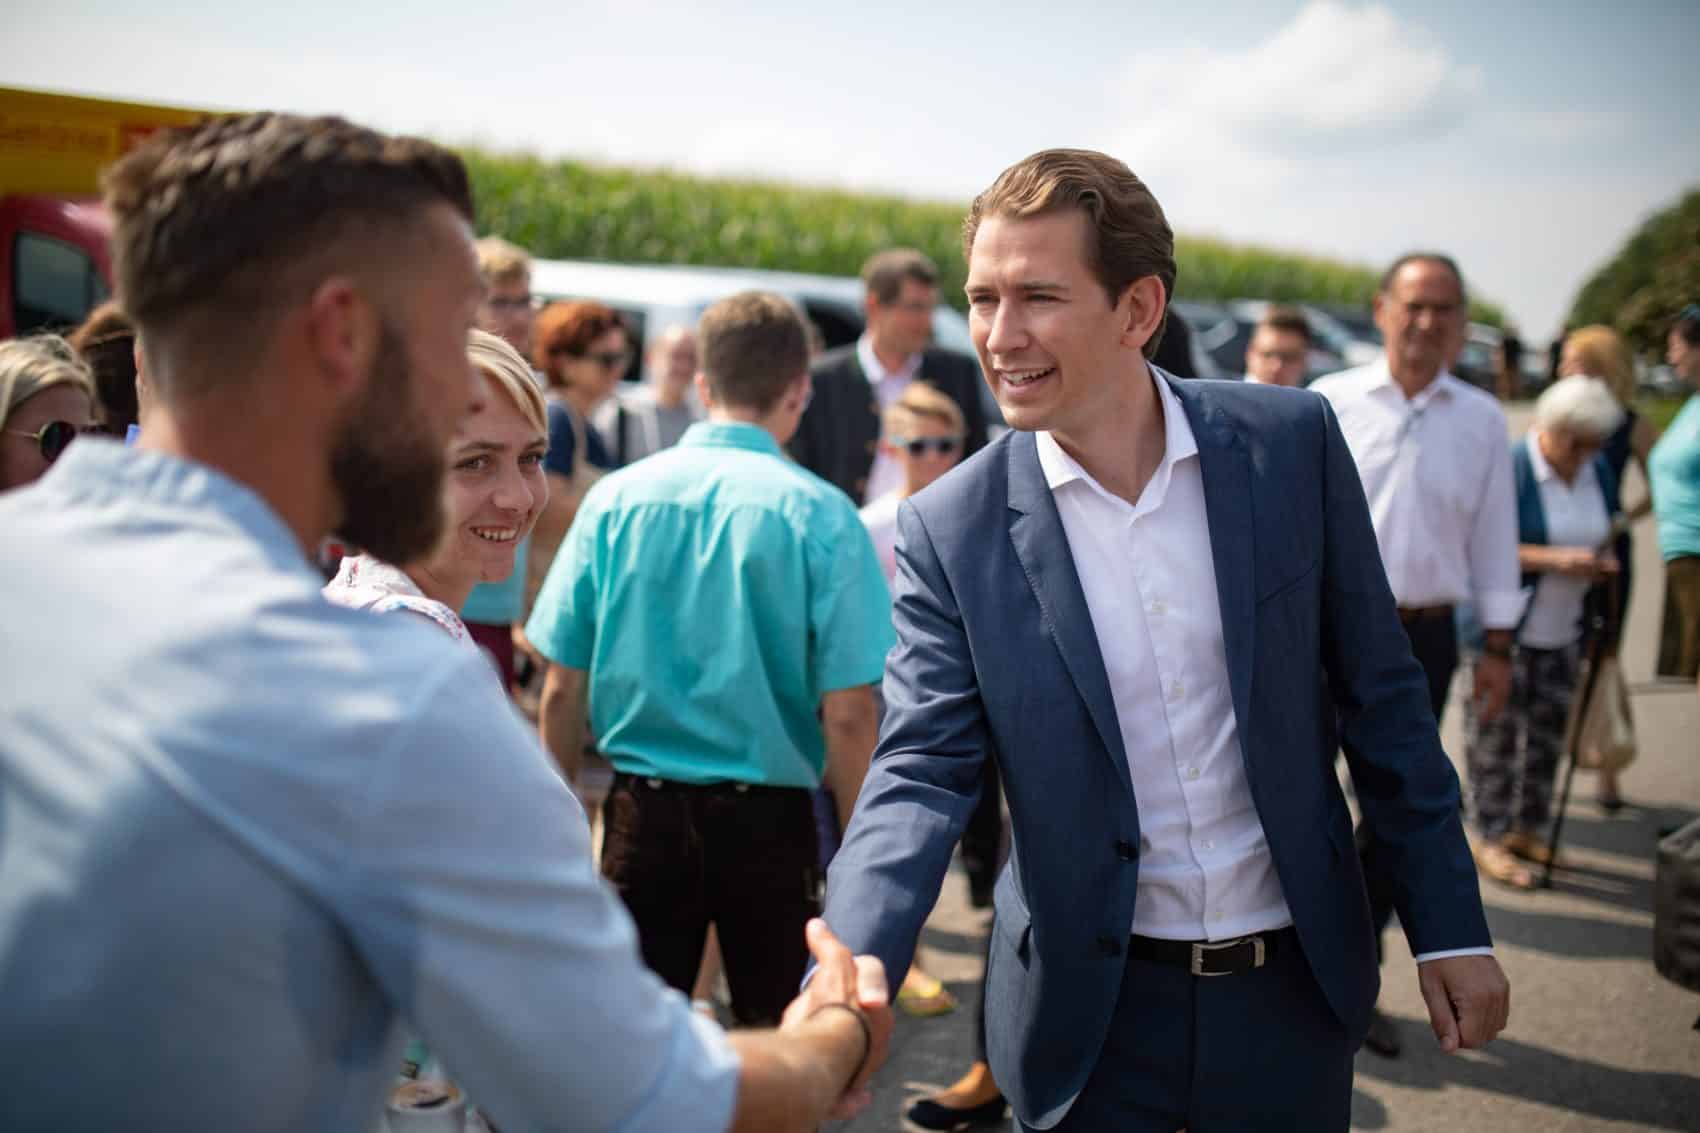 ÖVP-Spitzenkandidat und Parteivorsitzender Sebastian Kurz kommt am Samstag, dem 7. September, ins Congress Center Villach.